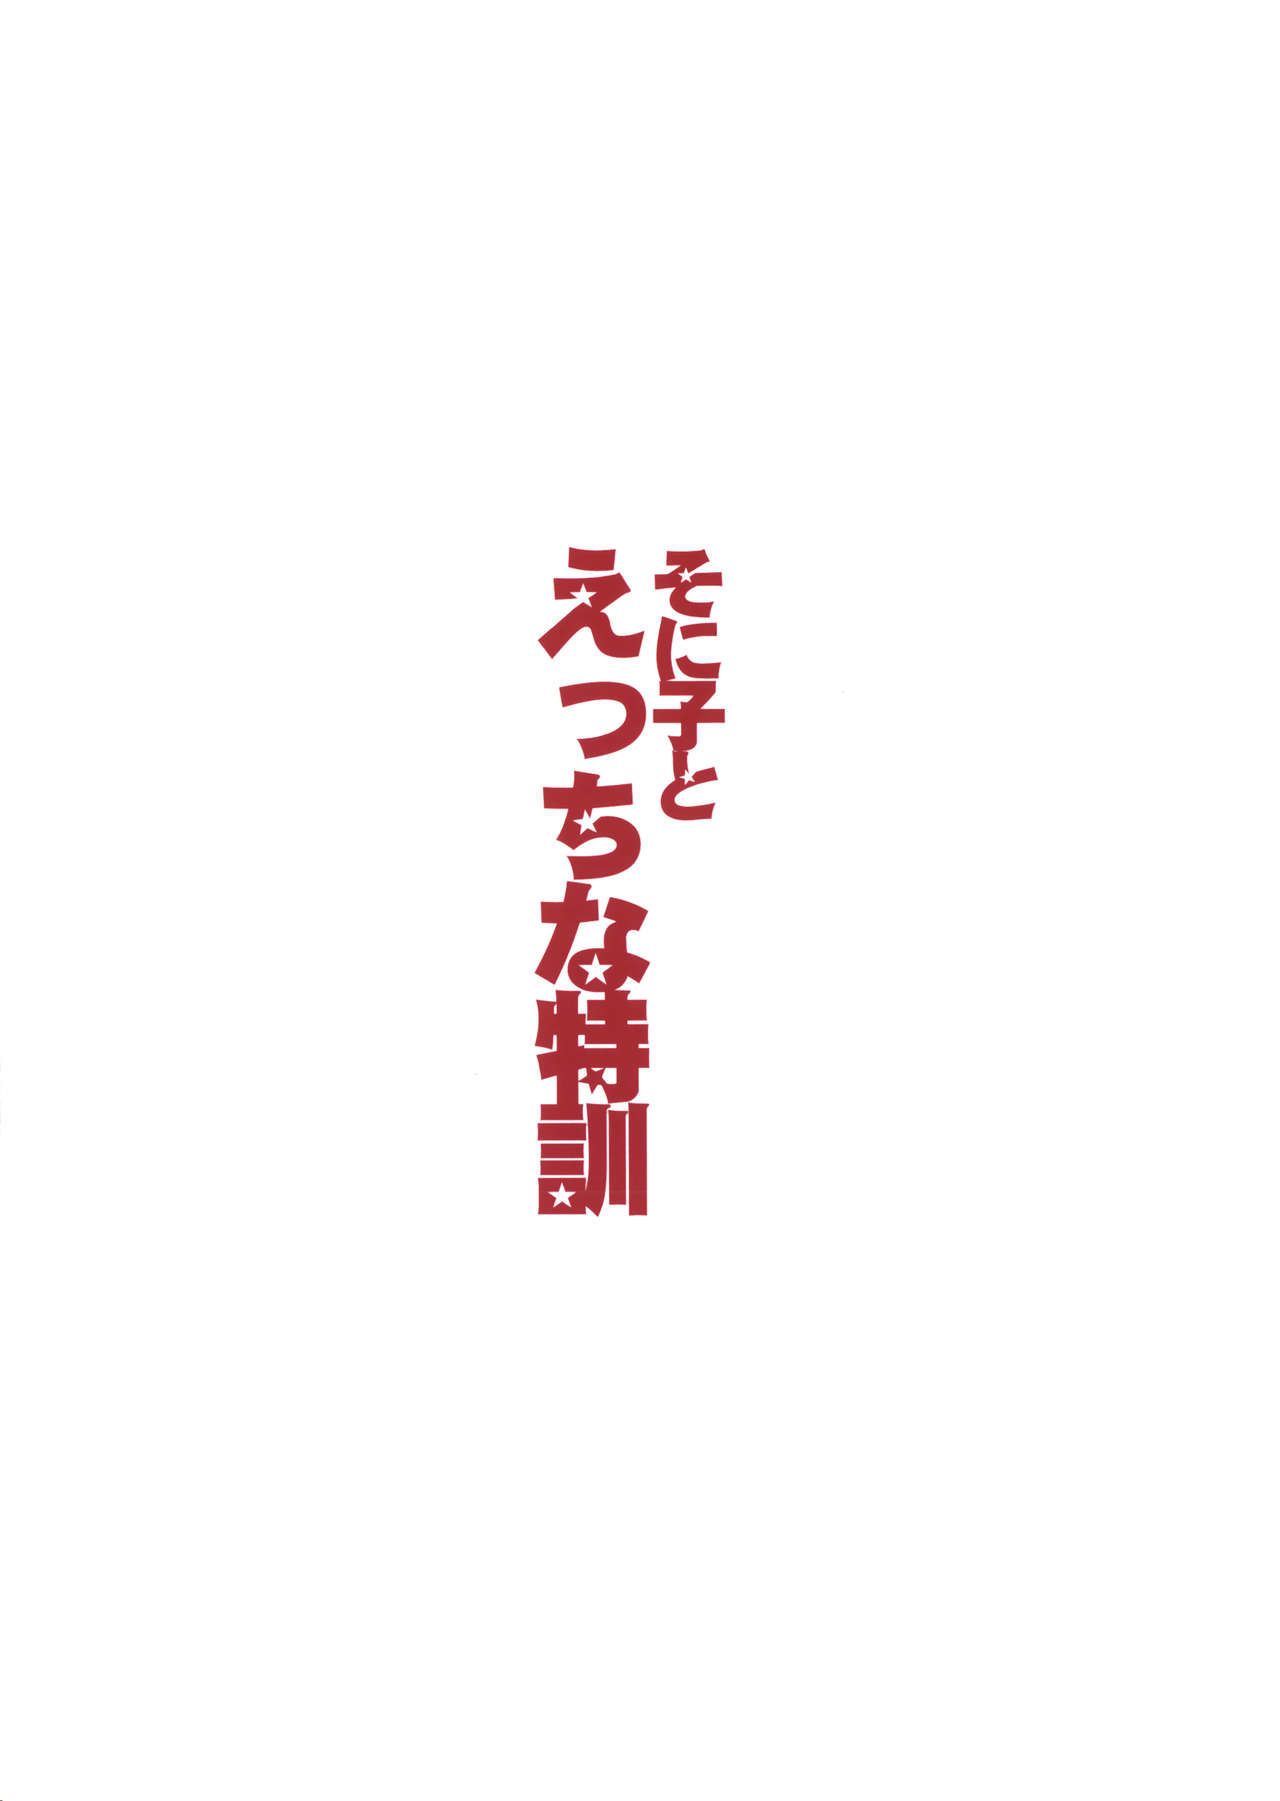 (sc63) rouge de la couronne (ishigami kazui) Sonico pour Ecchi na tokkun Lubrique De formation Avec Sonico (super sonico) biribiri